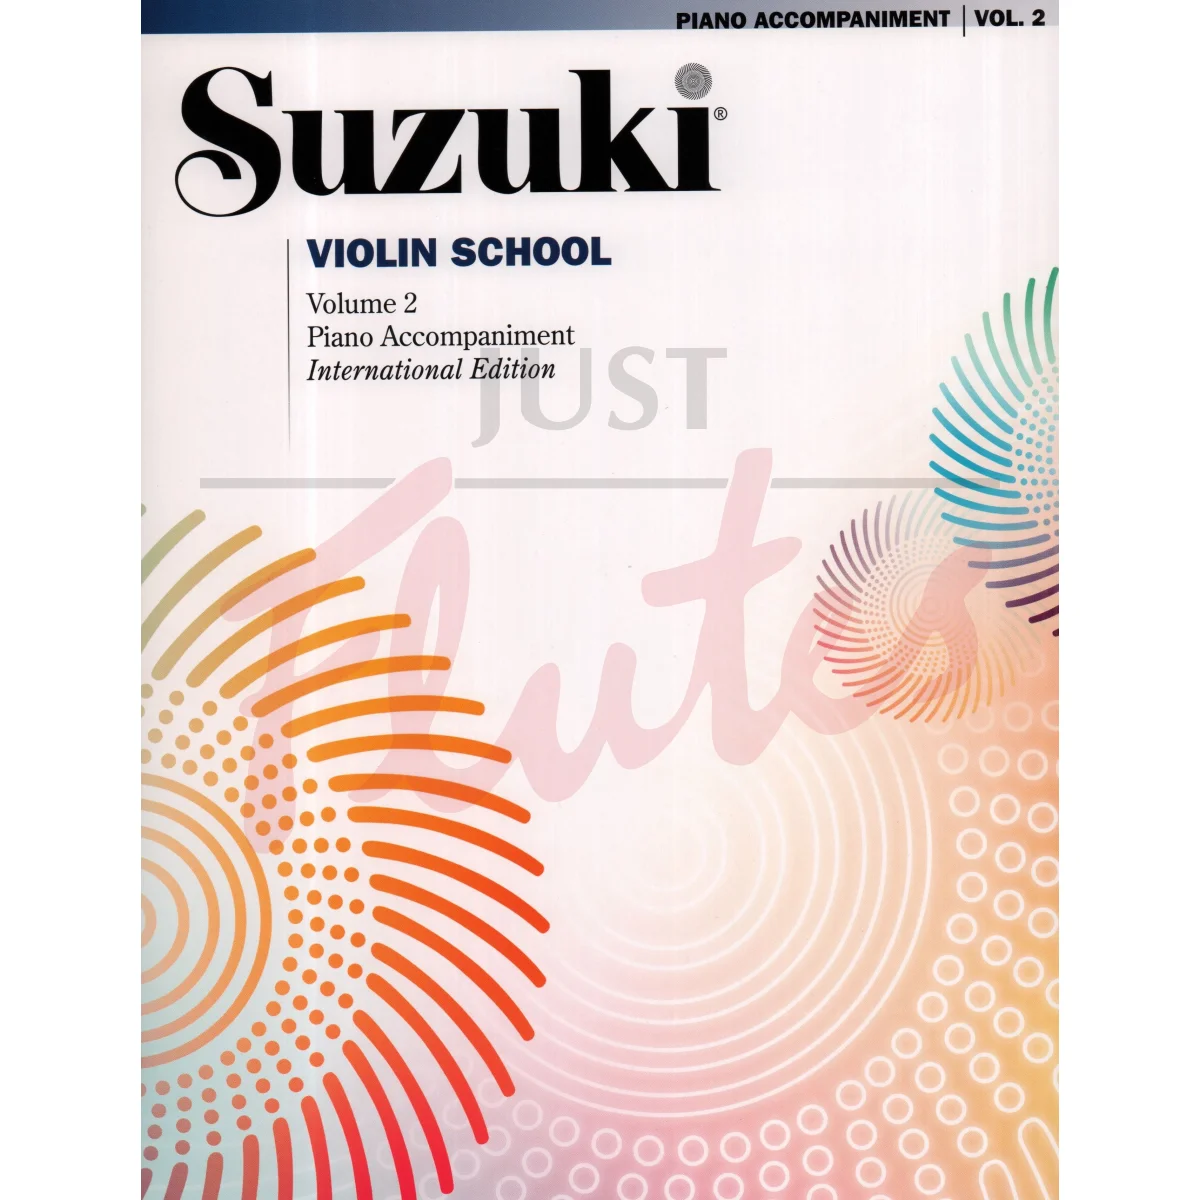 Suzuki Violin School Vol 2 (International Edition) [Piano Accompaniment]